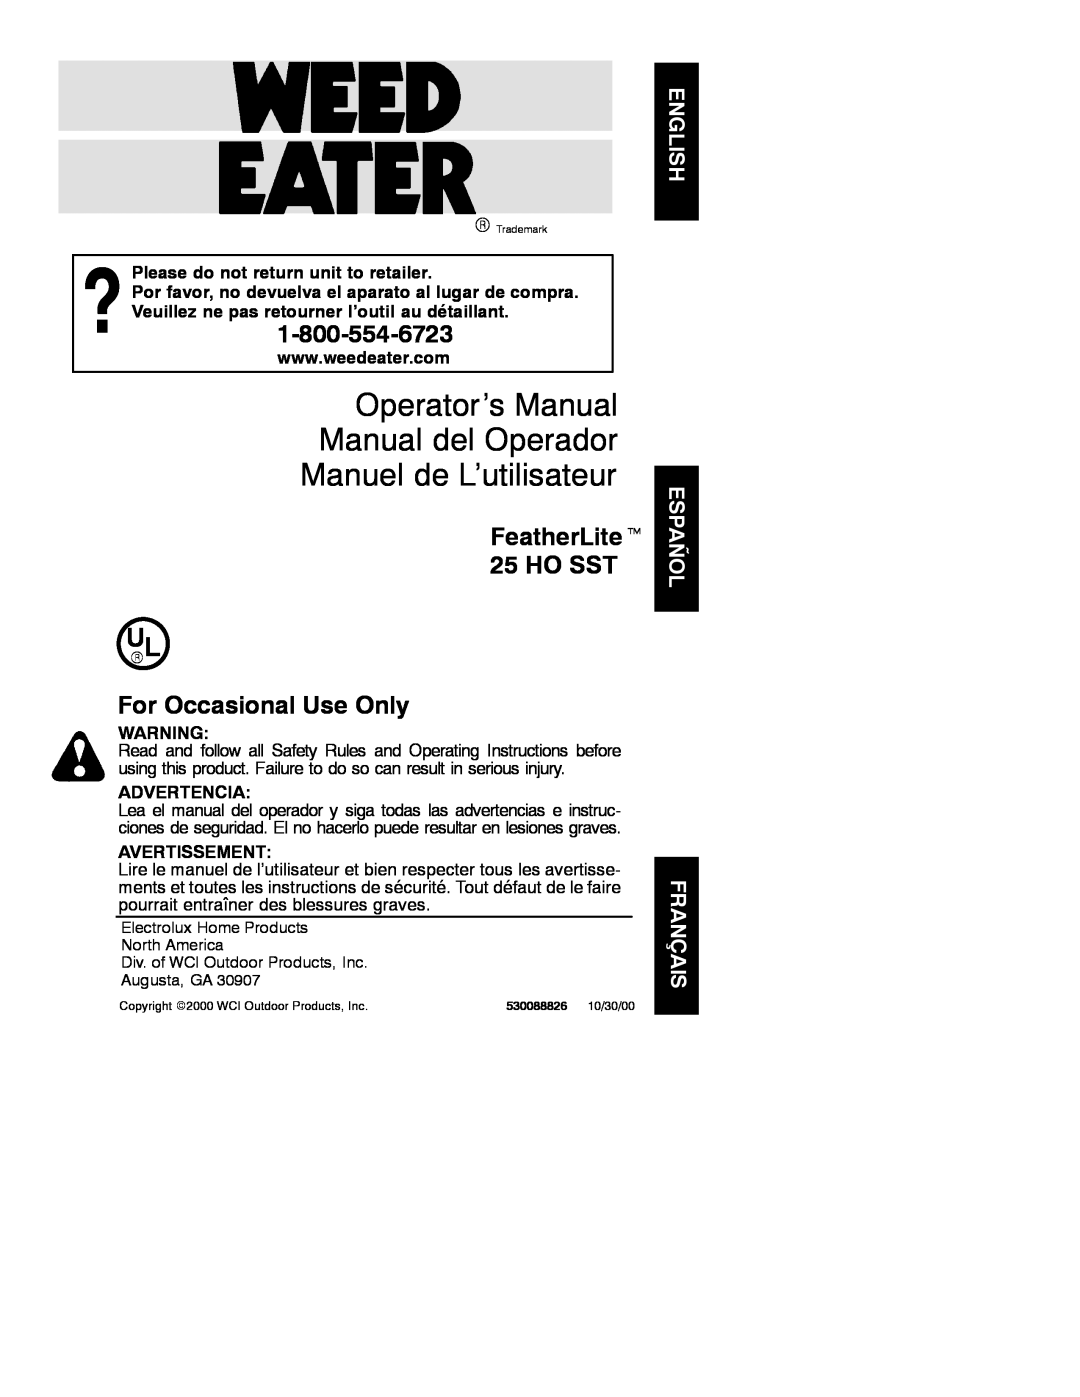 Weed Eater 530088826 manual Operator’s Manual Manual del Operador Manuel de L’utilisateur, FeatherLitet, Ho Sst 